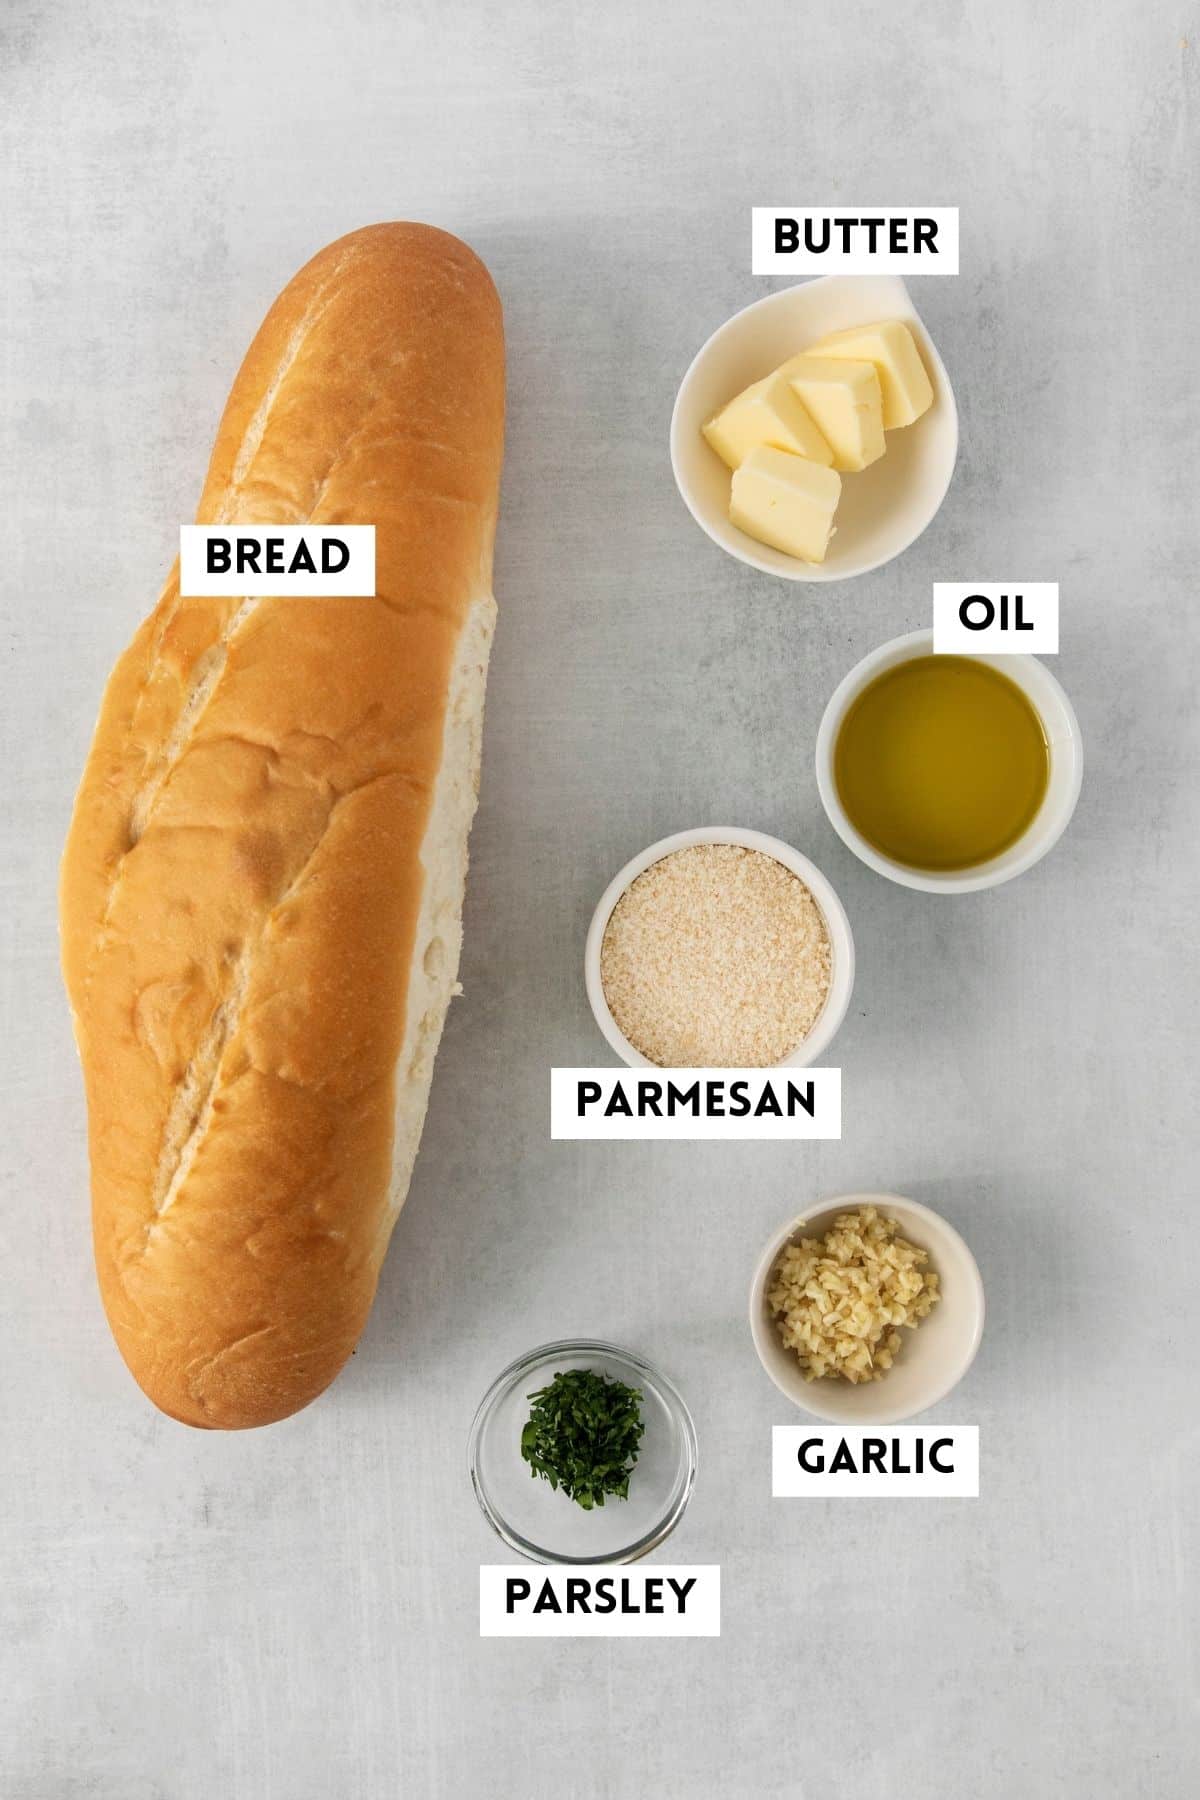 Ingredients for making garlic bread.